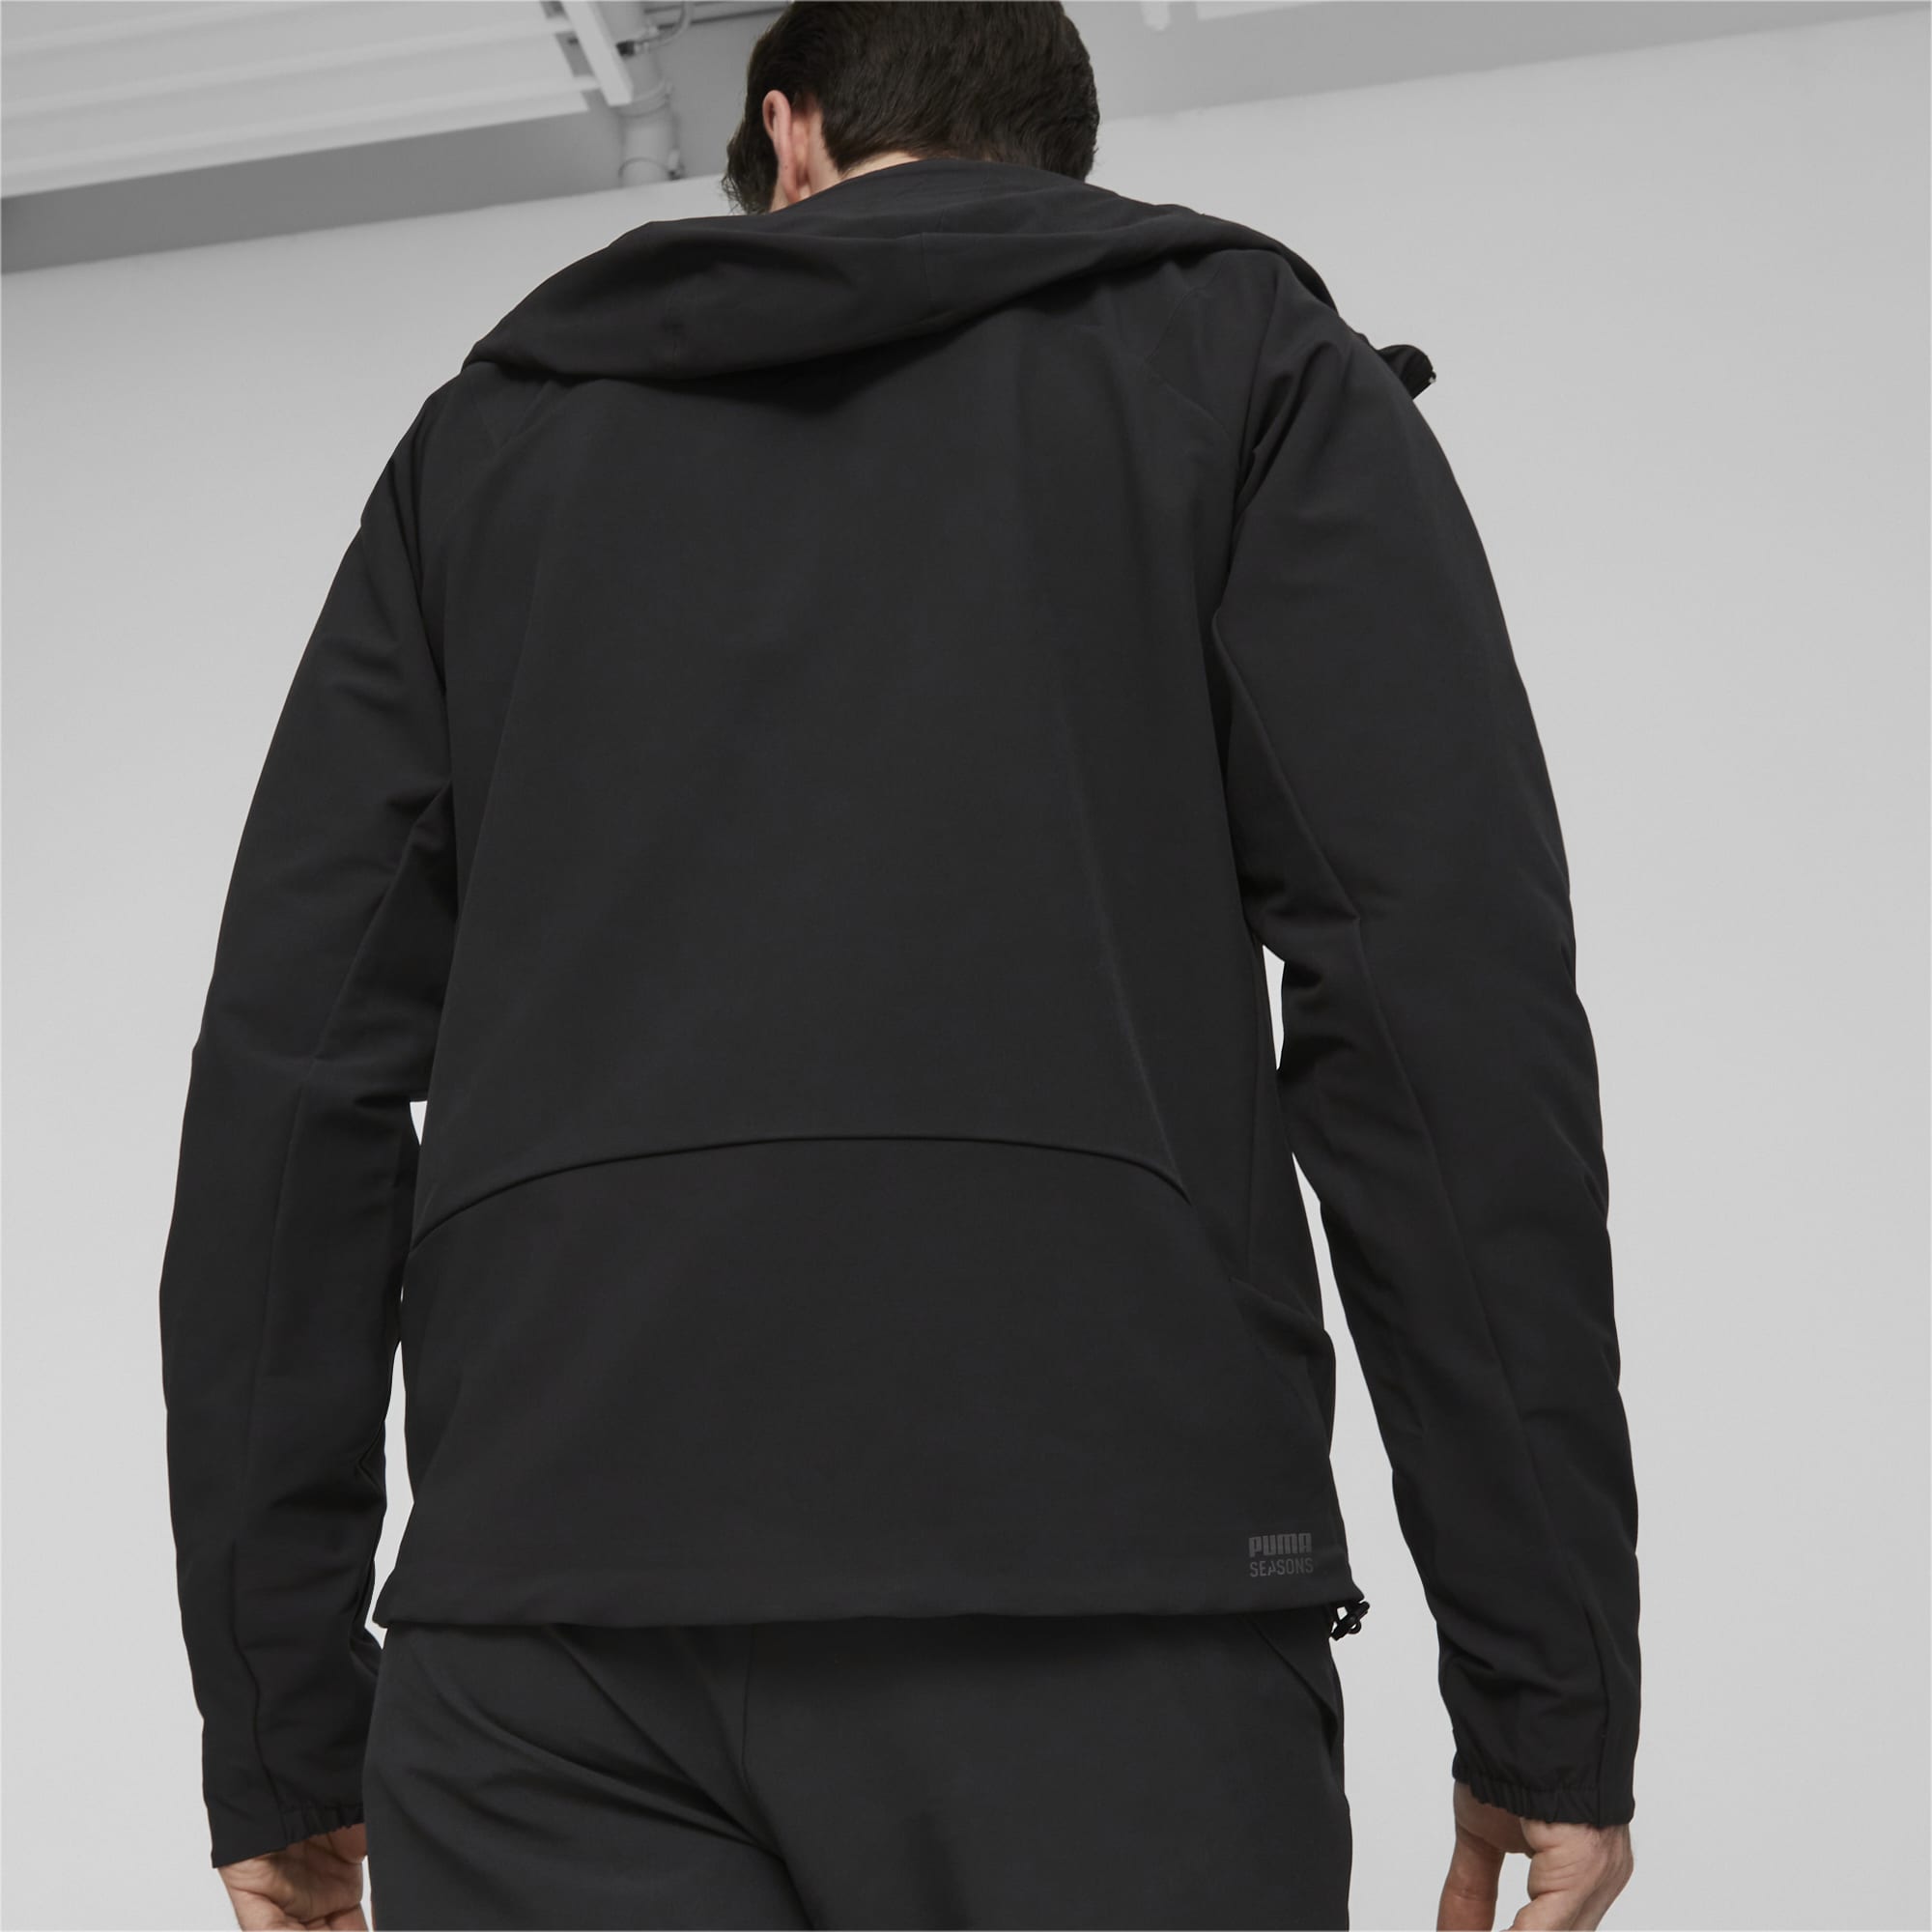 PUMA Seasons Men's Softshell Running Jacket, Black, Size XS, Clothing